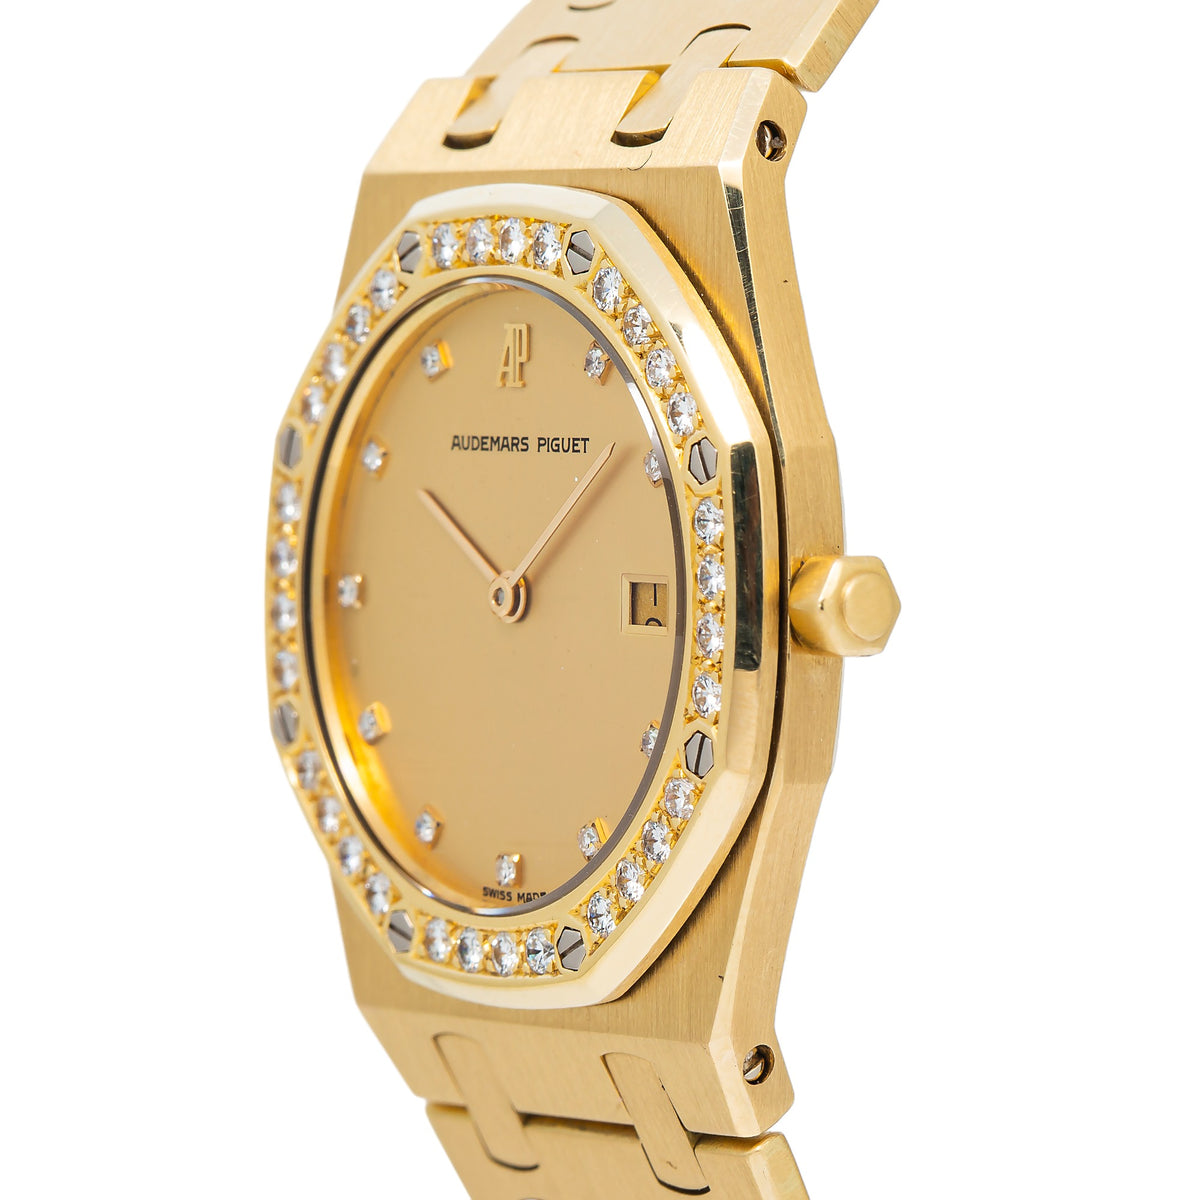 Audemars Piguet Royal Oak 56143BA 18k Yellow Gold Champagne Dial Watch 33mm